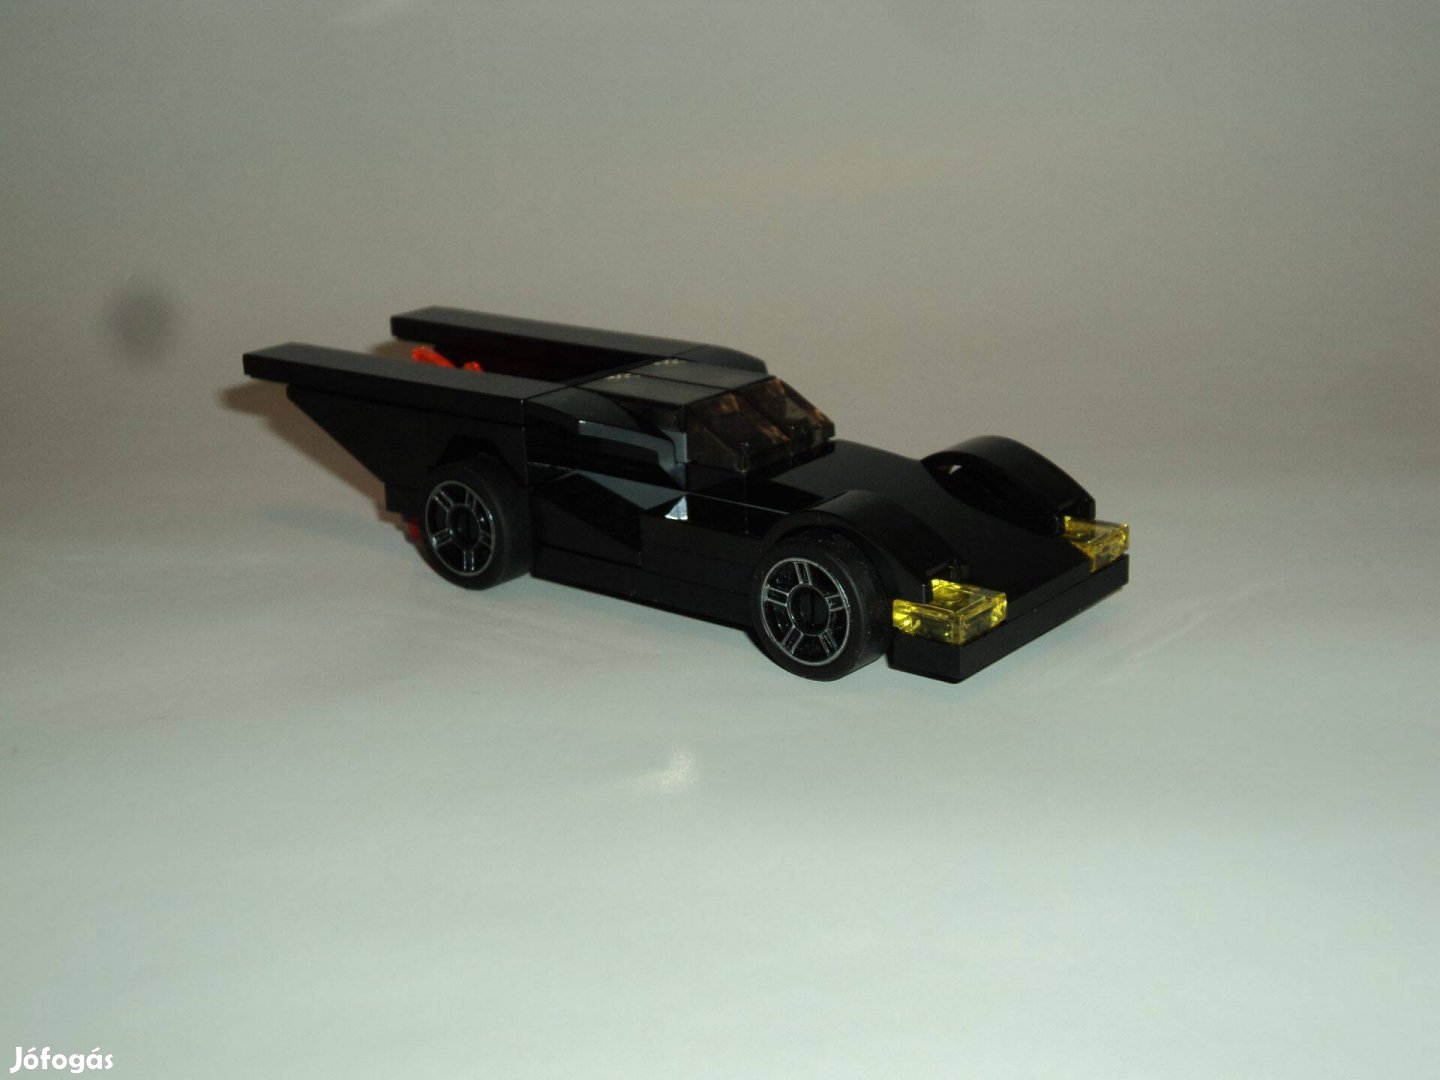 Super Heroes LEGO 30161 Batmobile